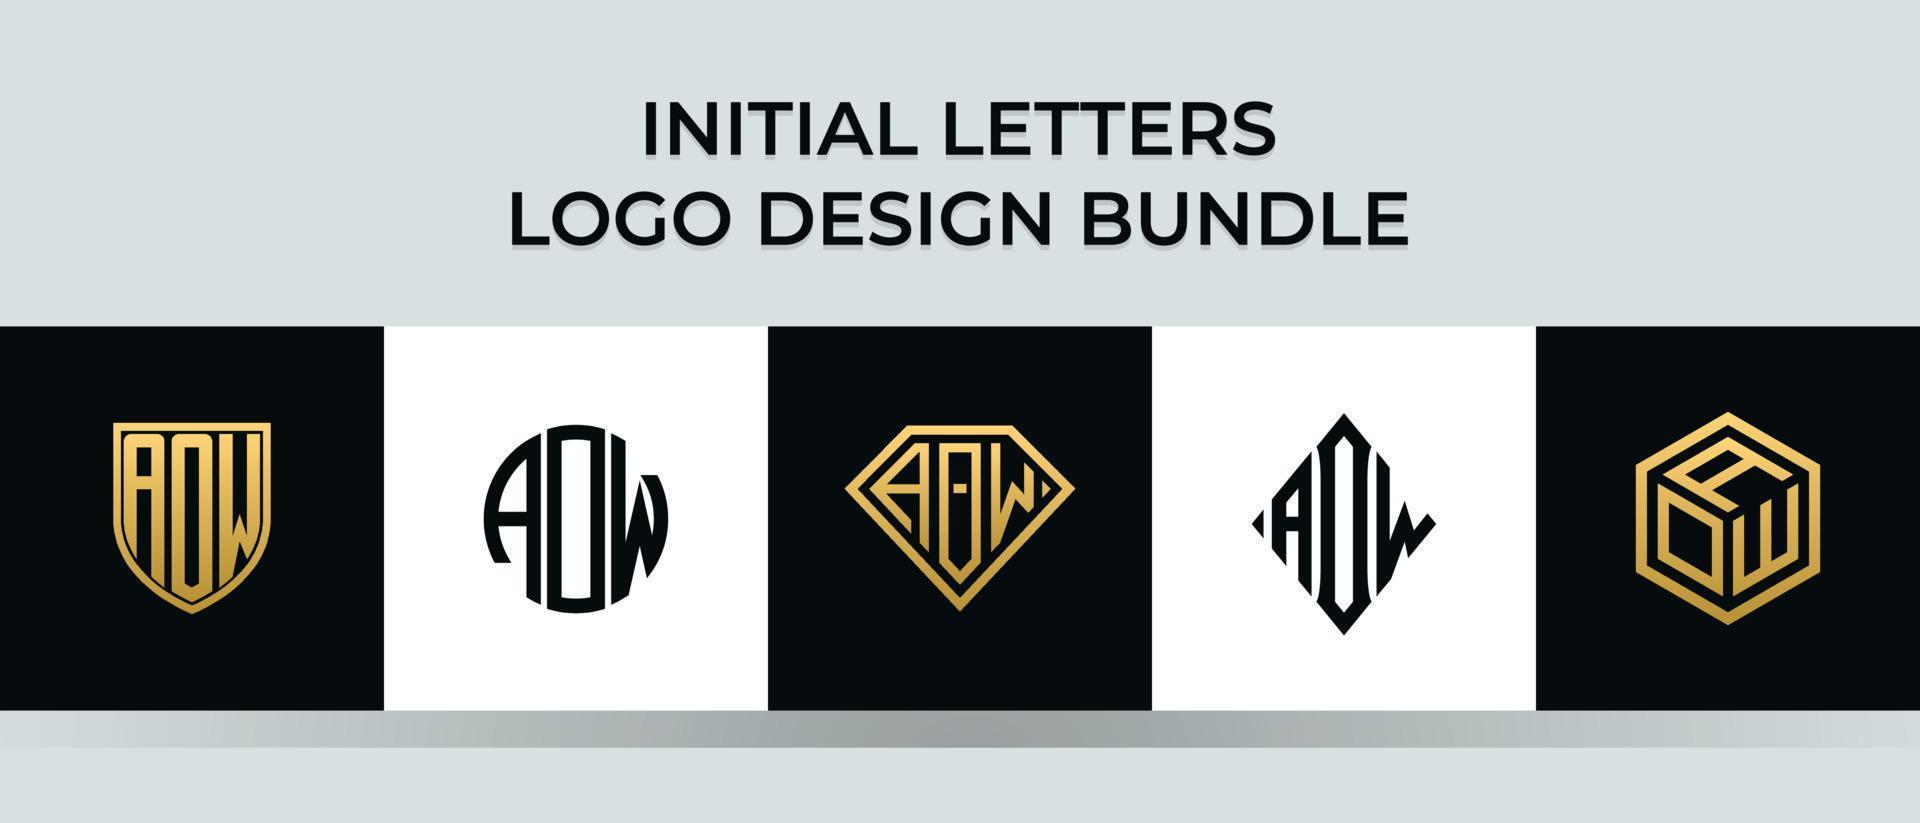 initiala bokstäver aow logotyp design bunt vektor